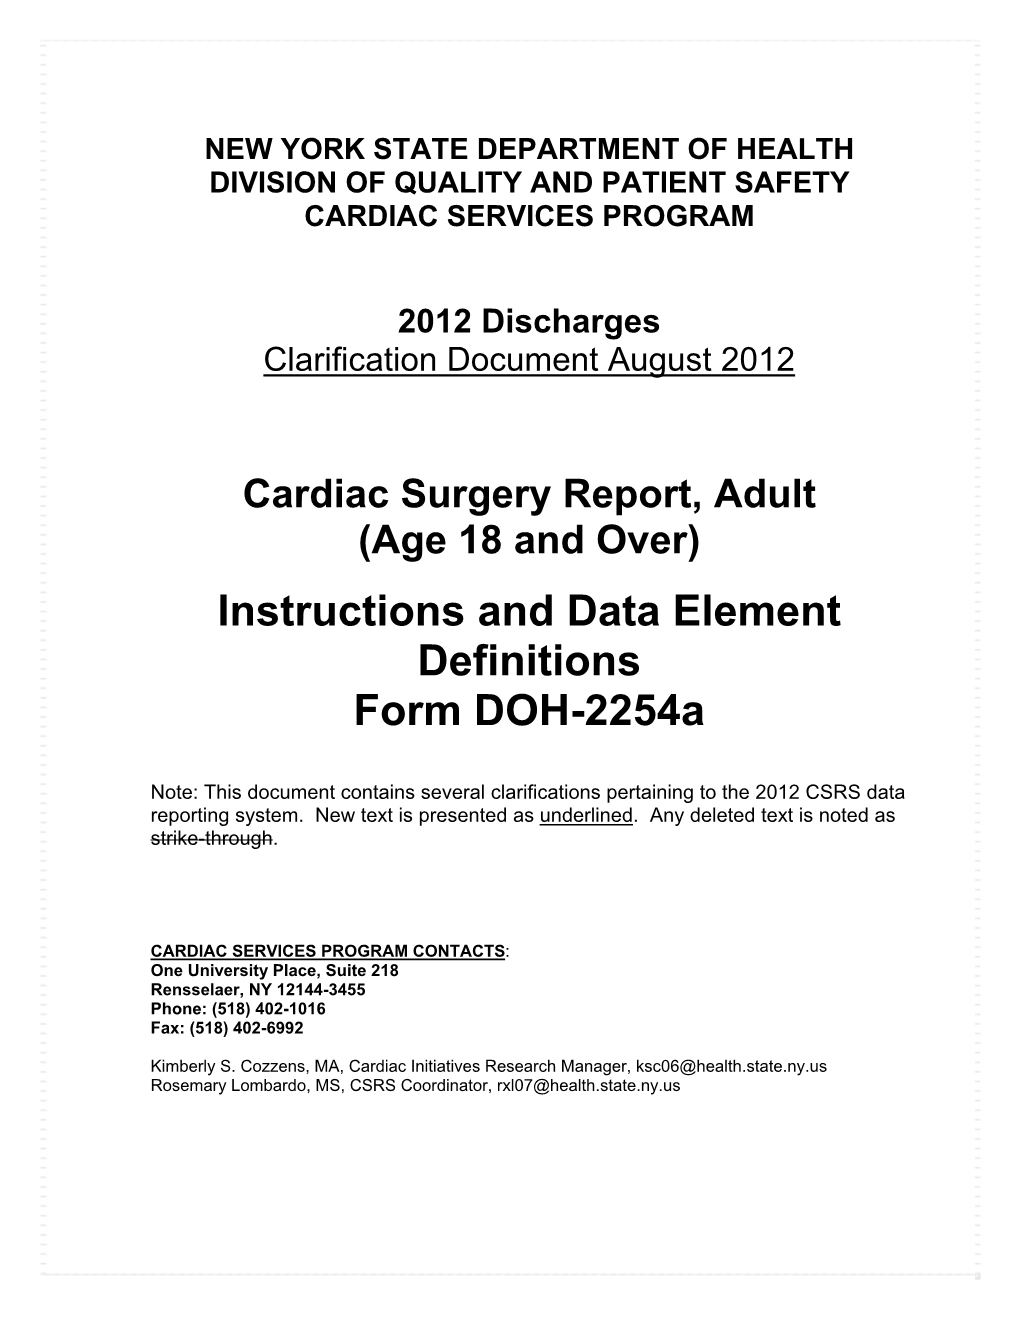 Cardiac Surgery Report (Adult)